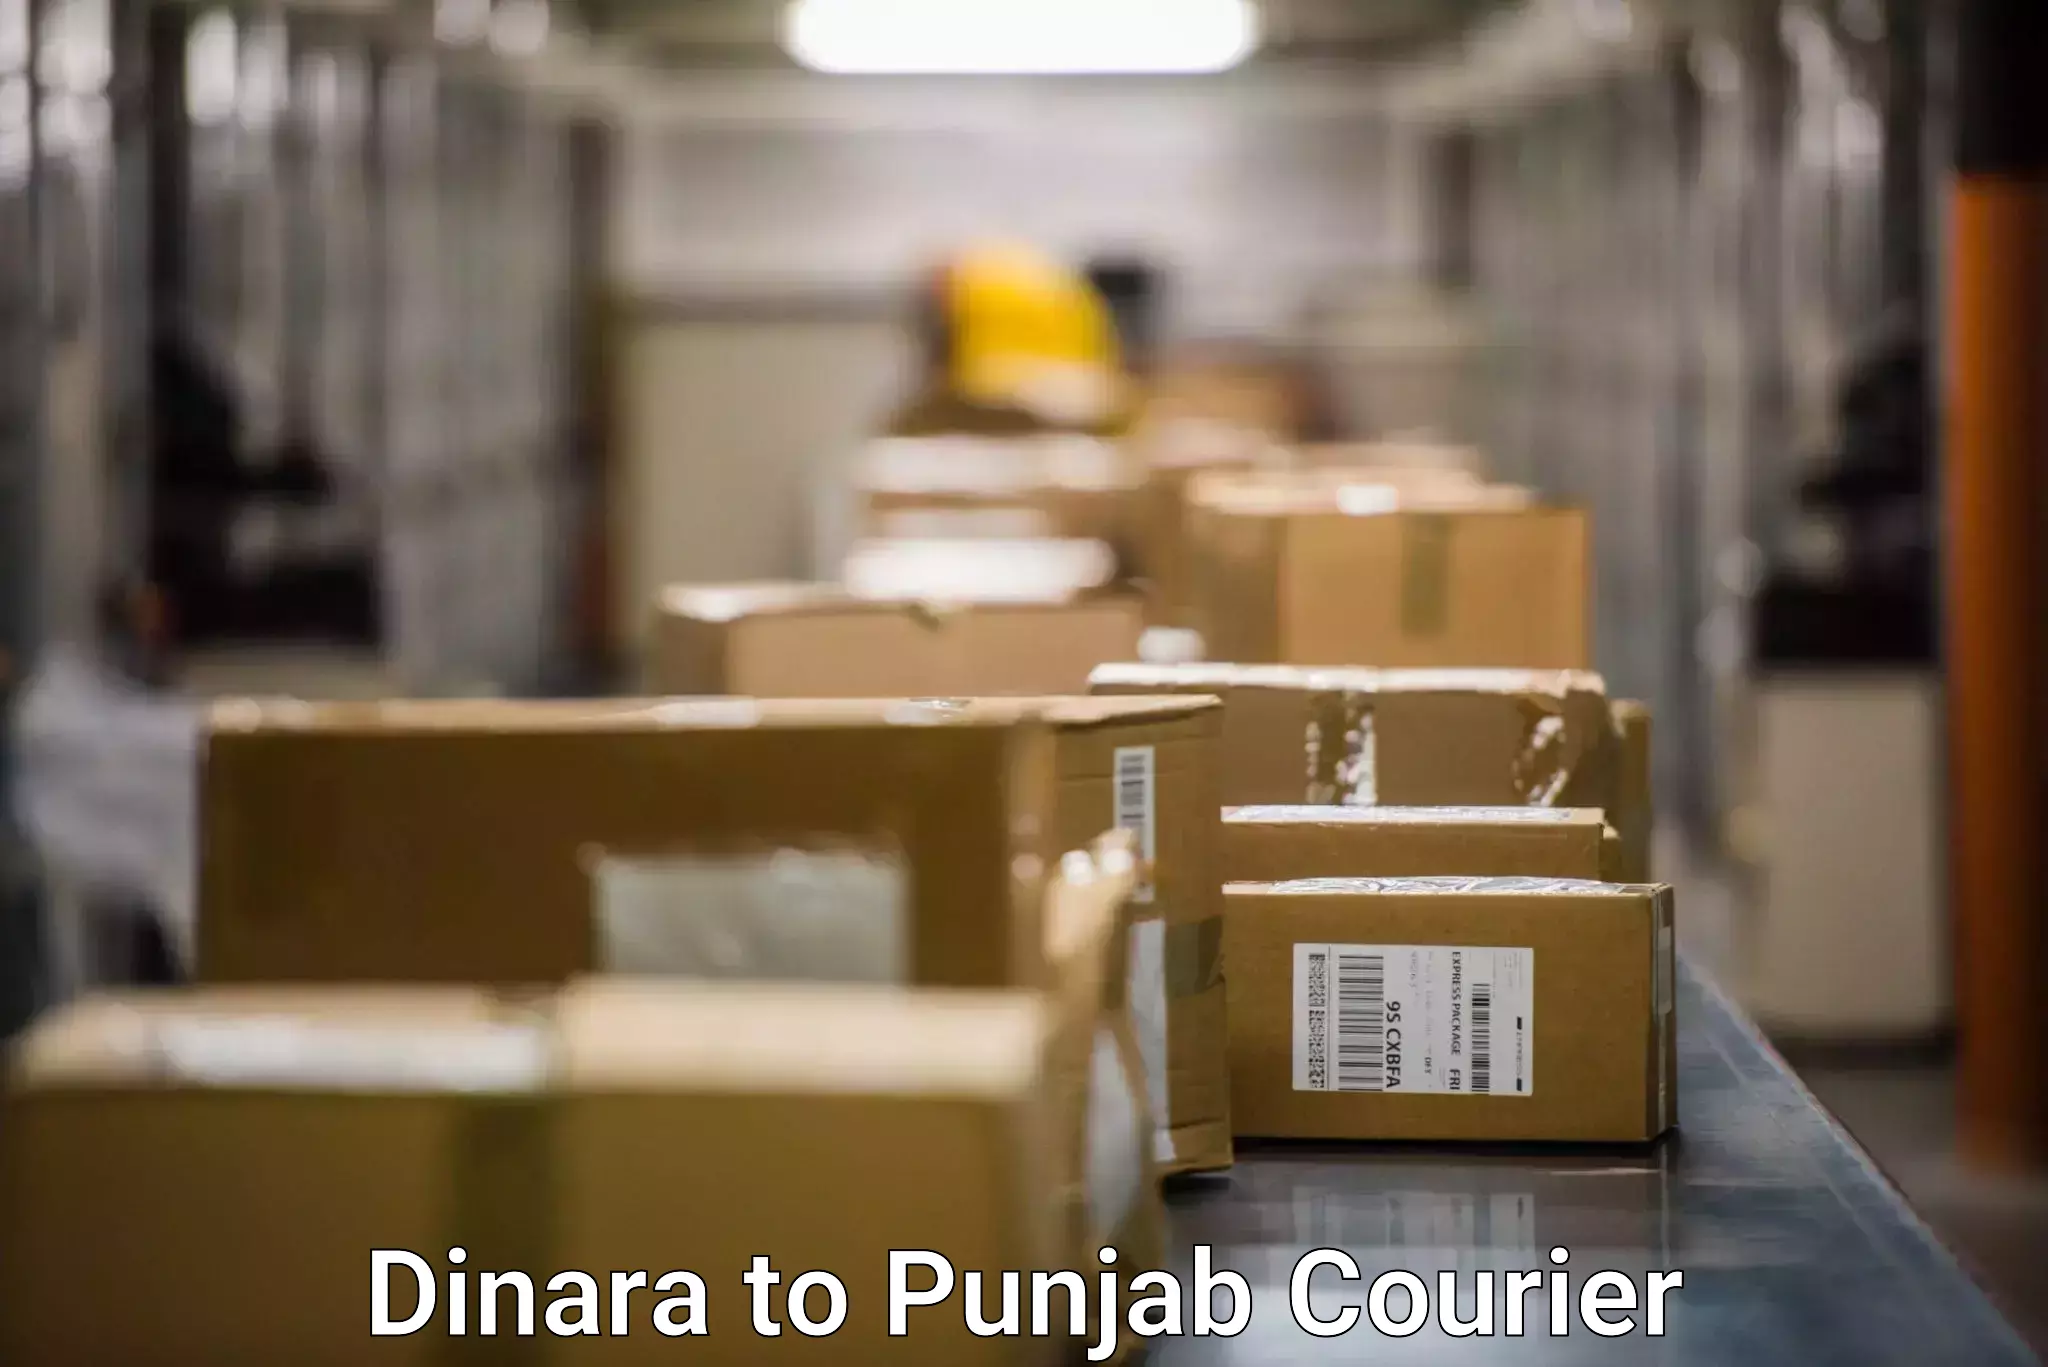 Cash on delivery service Dinara to Punjab